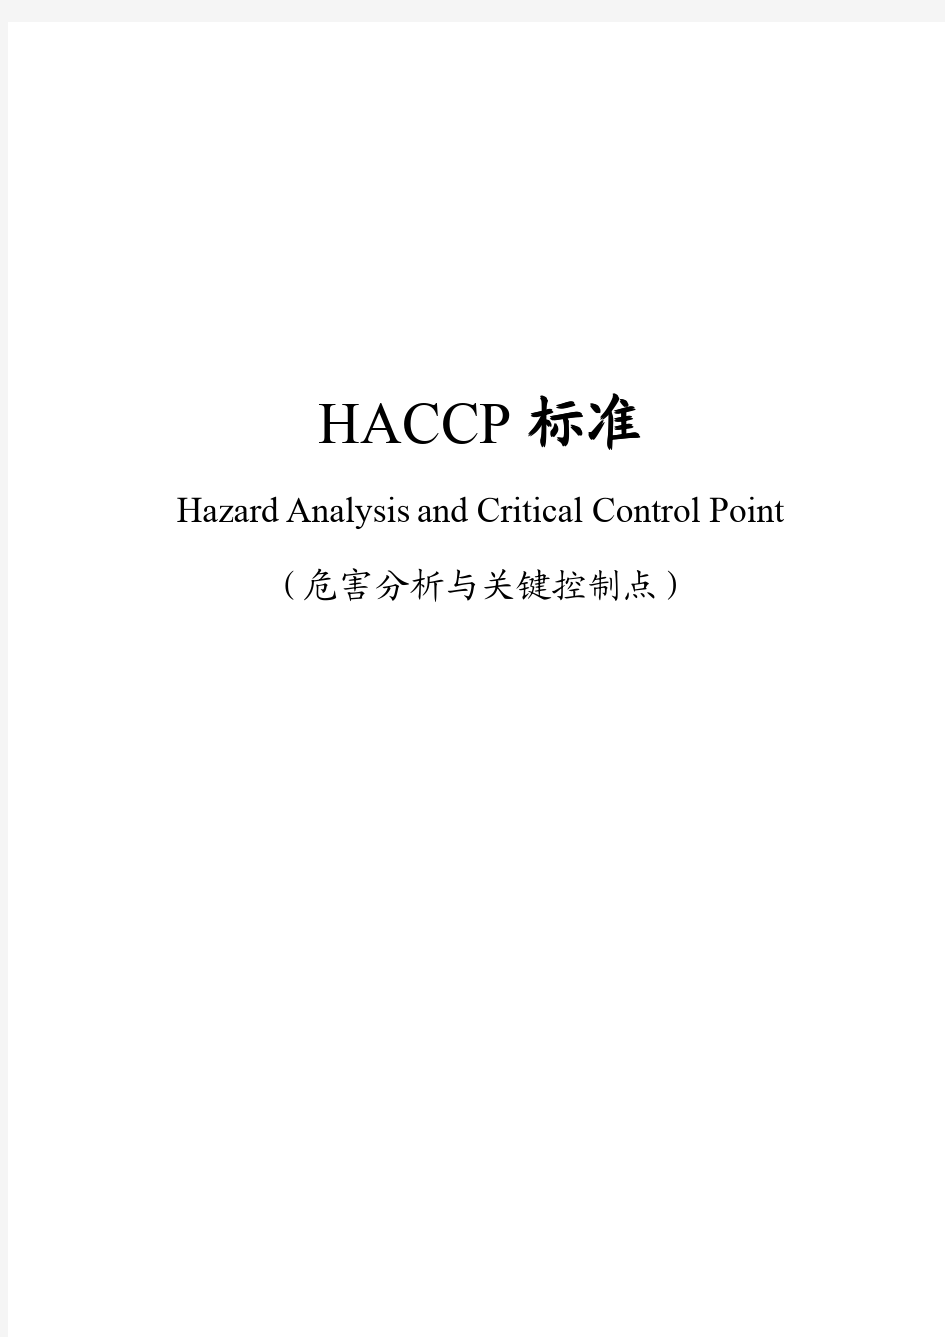 HACCP标准